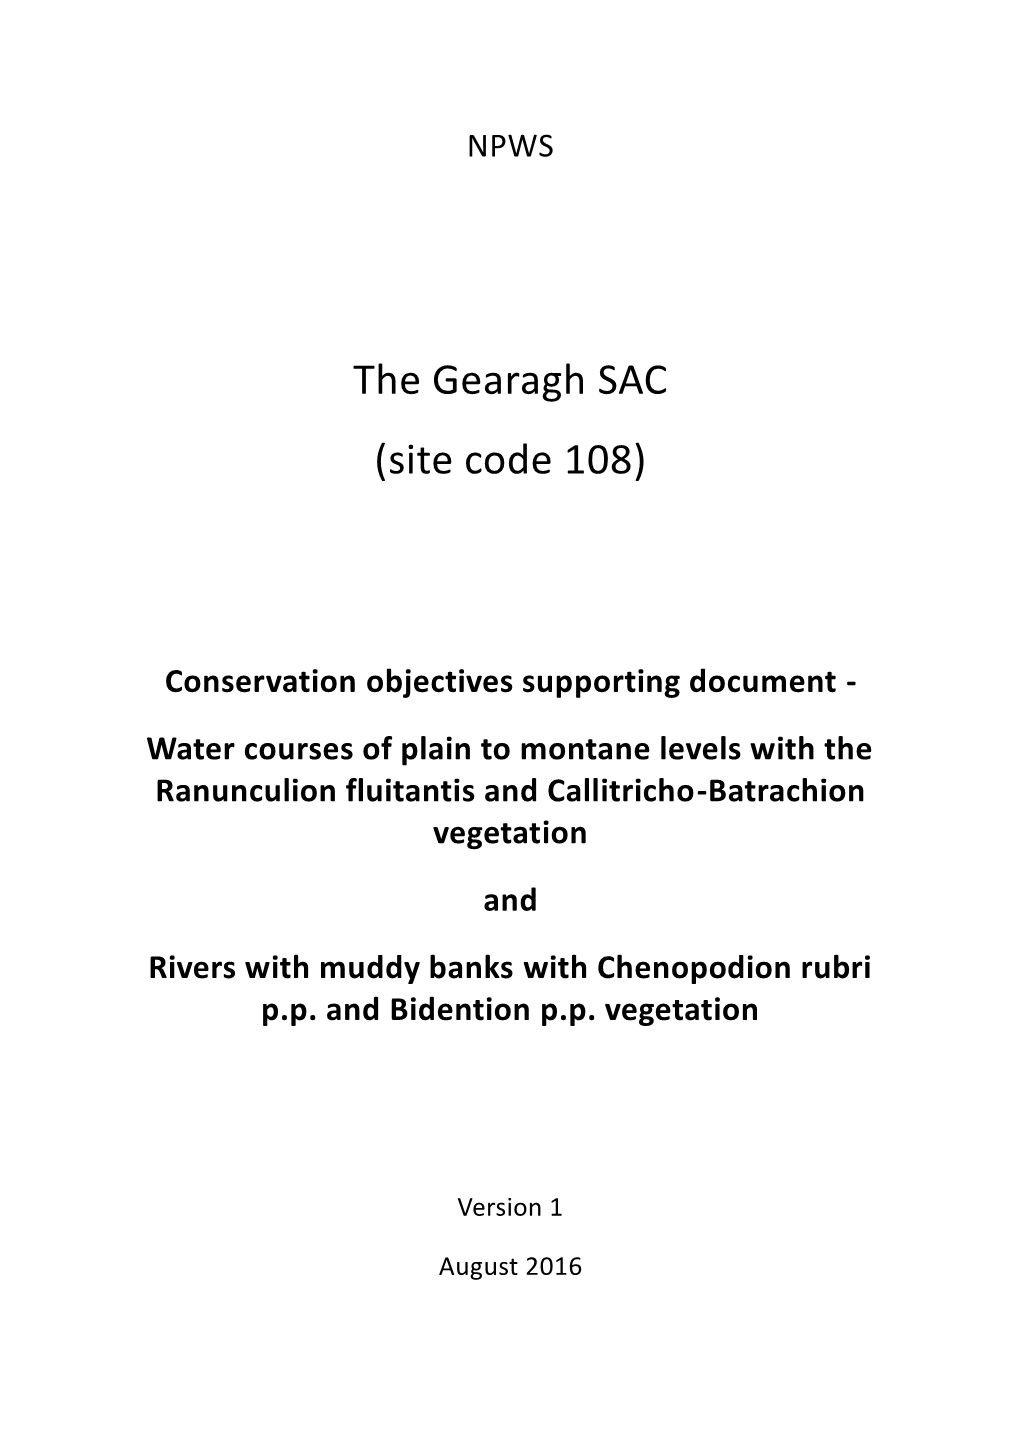 The Gearagh SAC (Site Code 108)